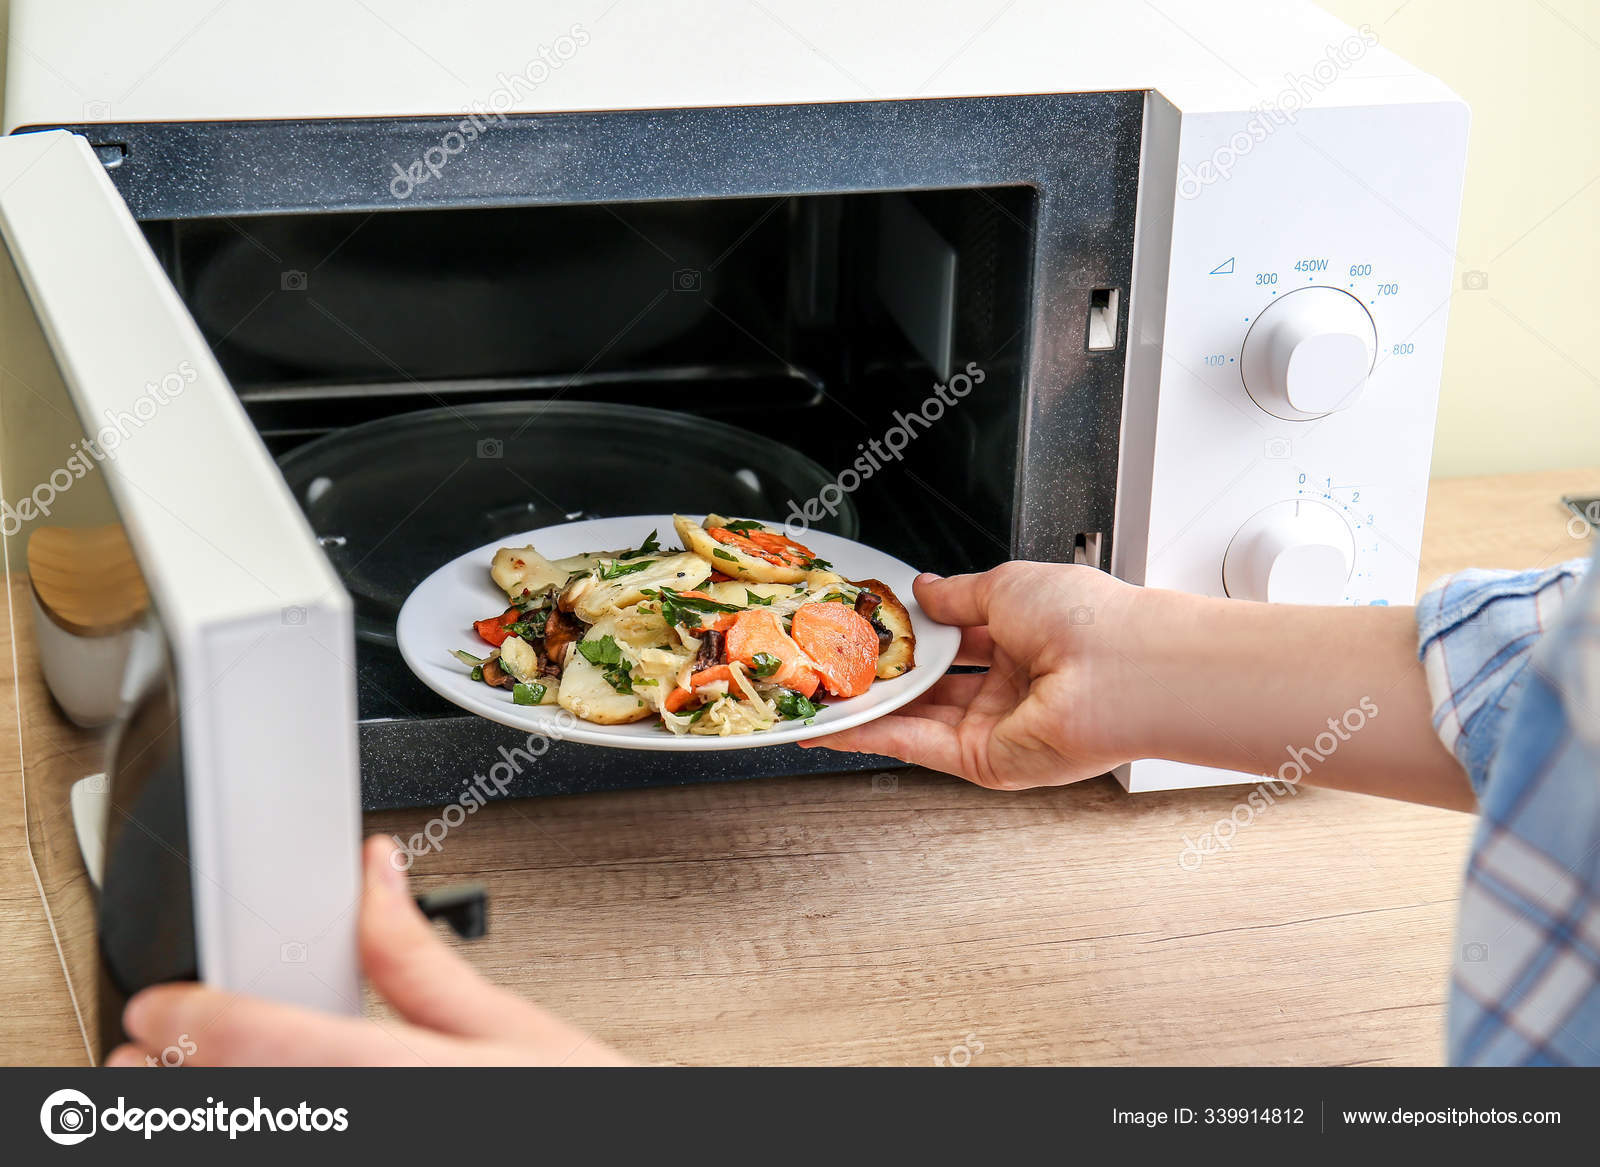 https://st3.depositphotos.com/10614052/33991/i/1600/depositphotos_339914812-stock-photo-woman-putting-plate-with-food.jpg